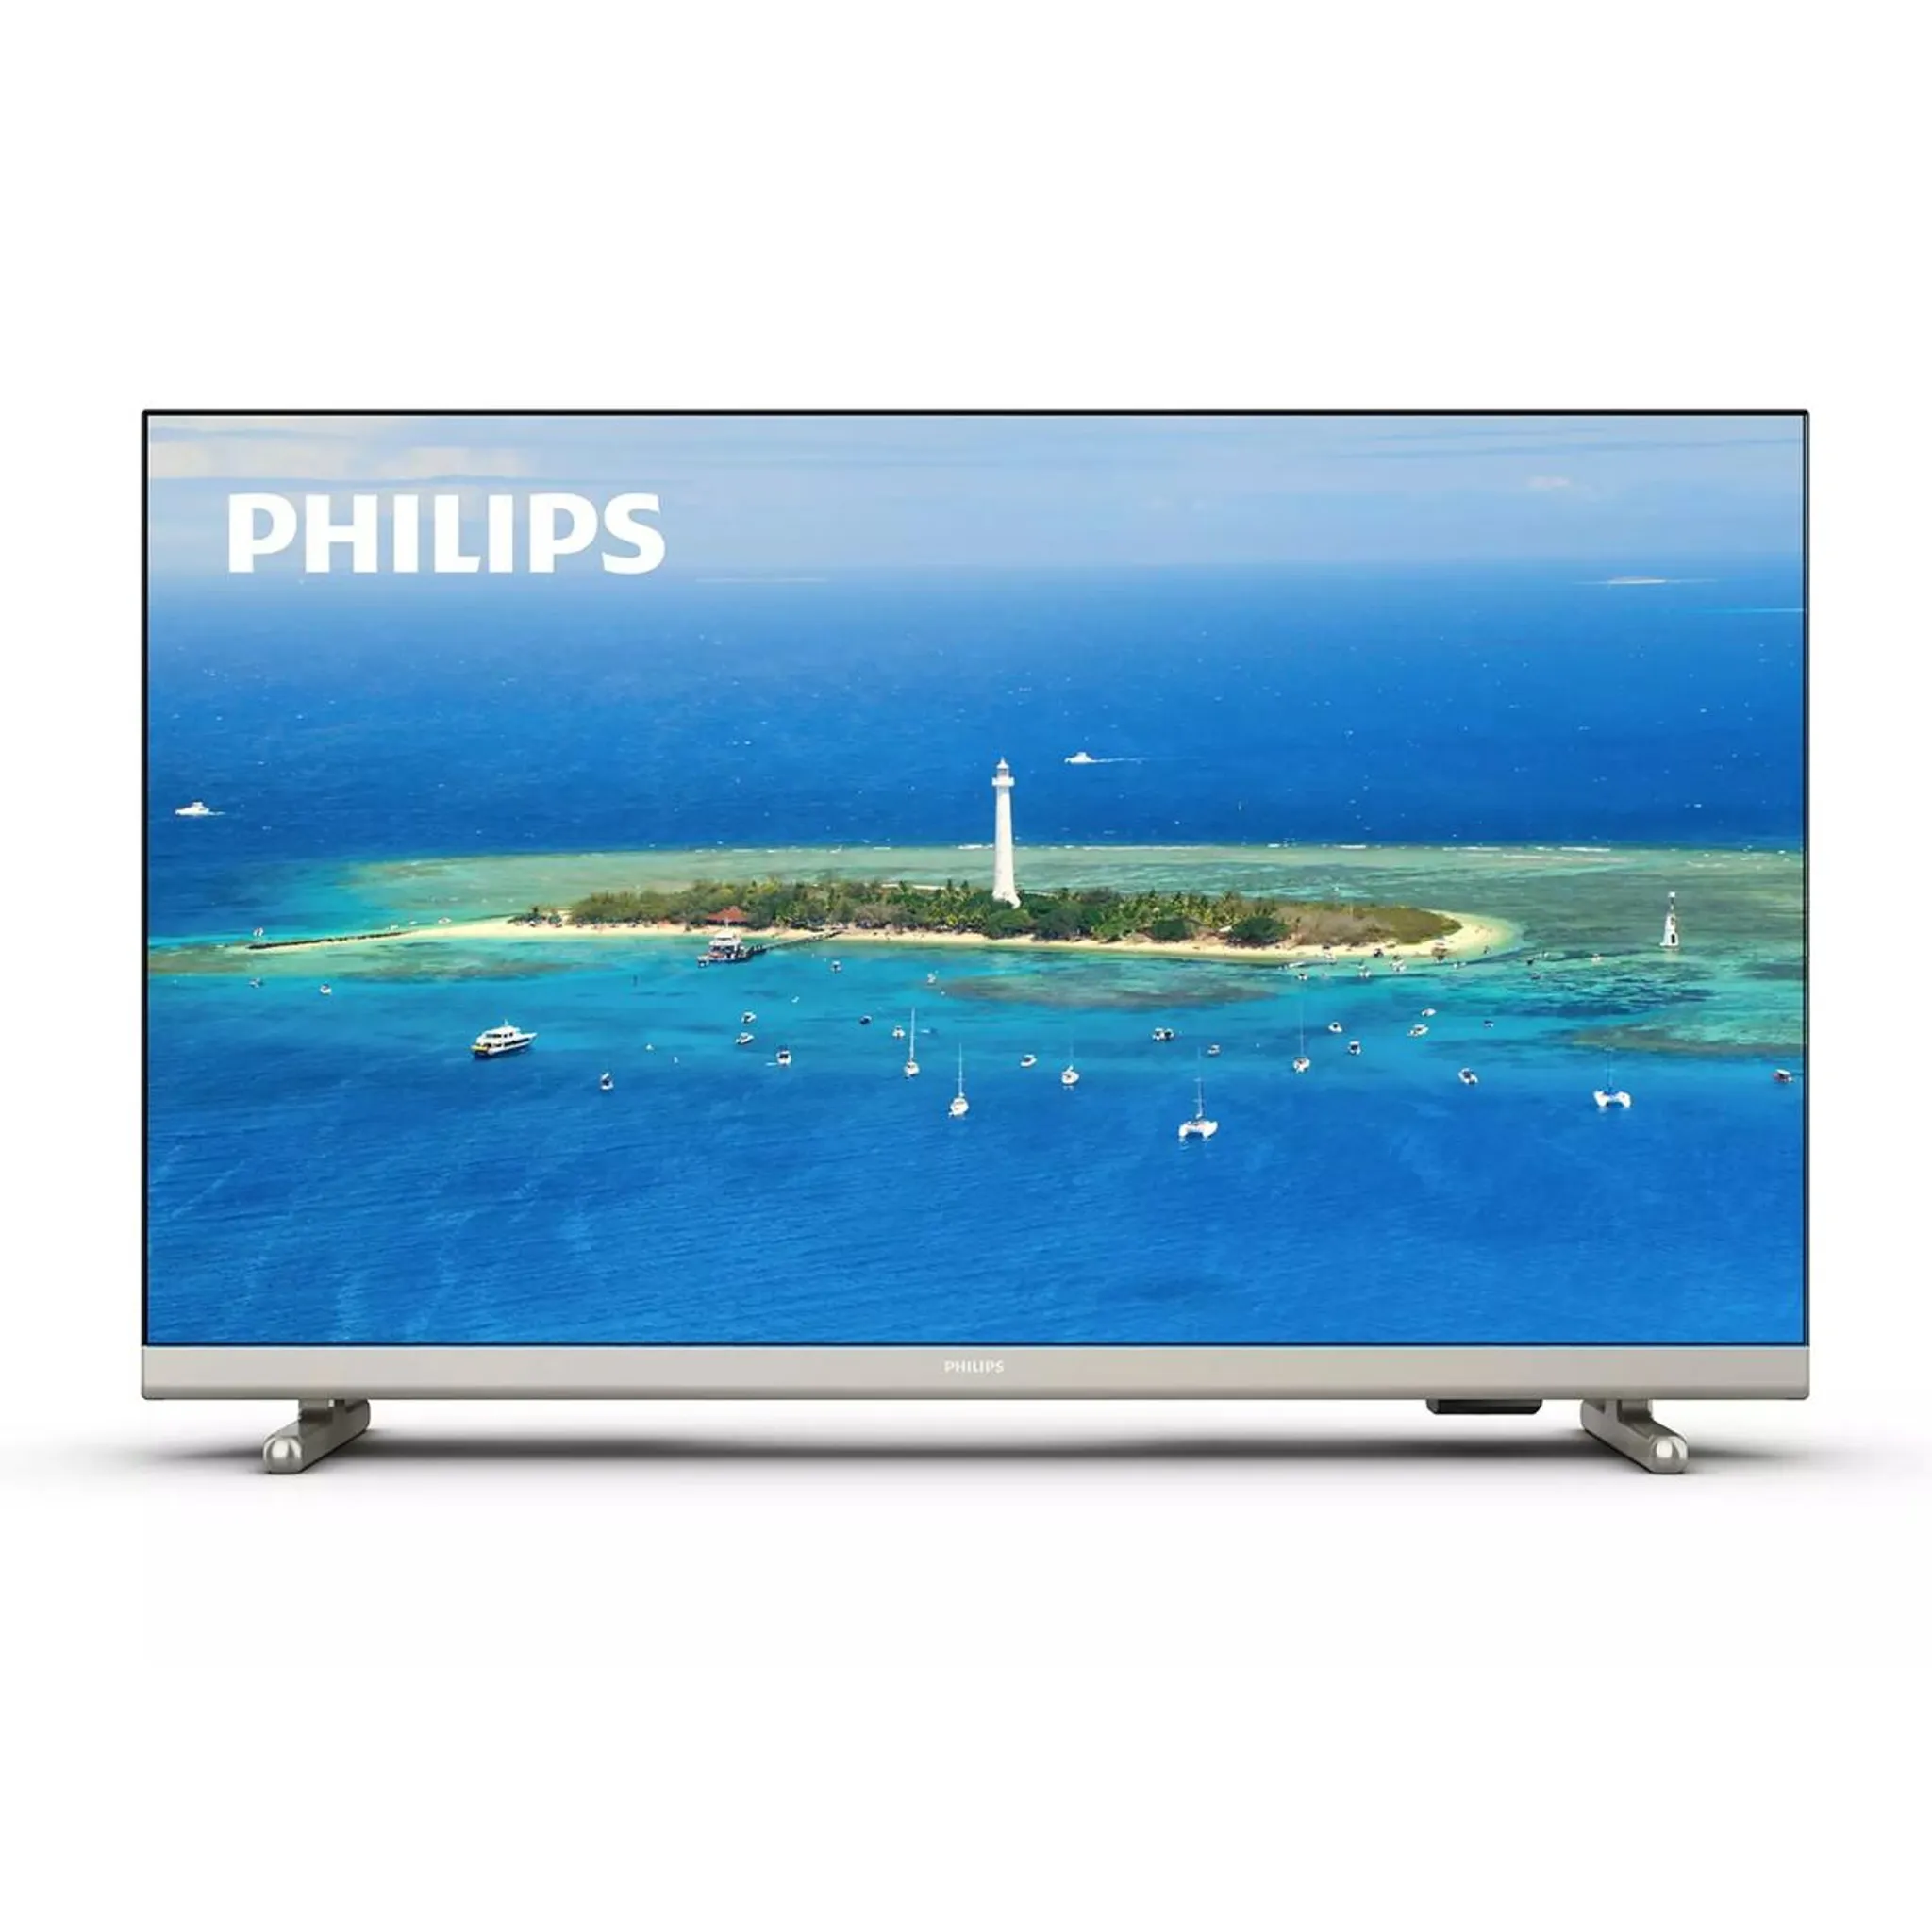 PHILIPS Fernseher 32PHS5527/12 LED HD TV 32